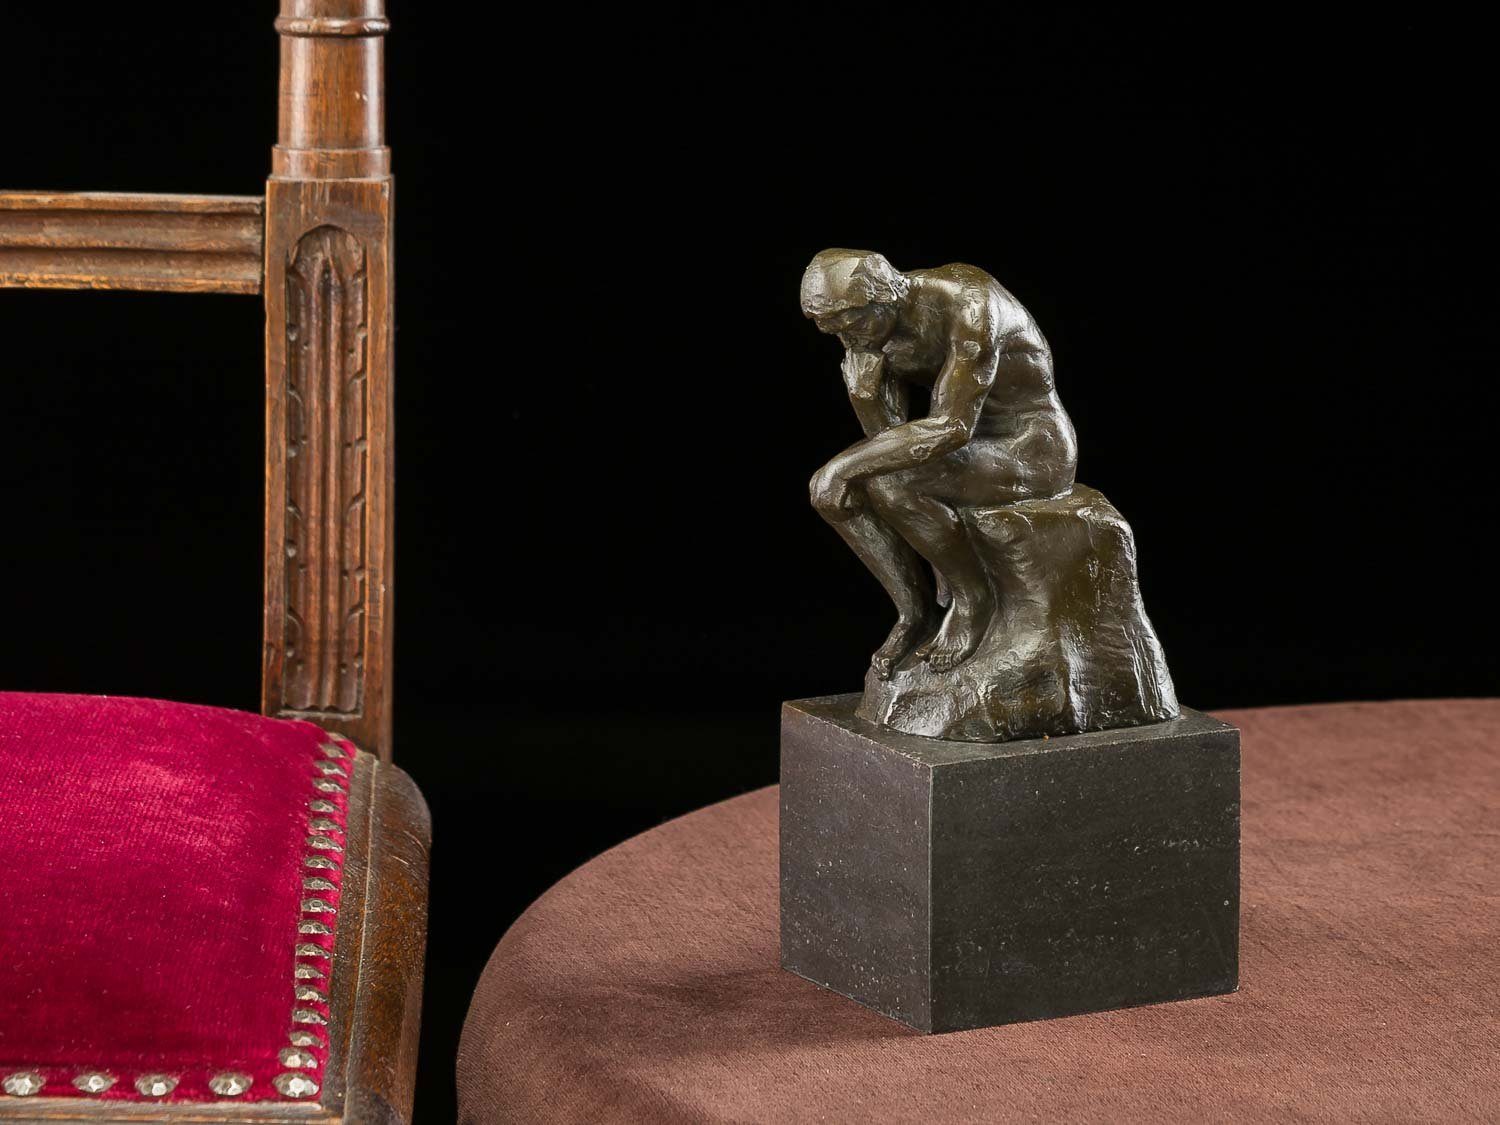 Aubaho Skulptur Bronzeskulptur Rodin Skulptur Bronzefigur Rep Denker Kopie Bronze nach